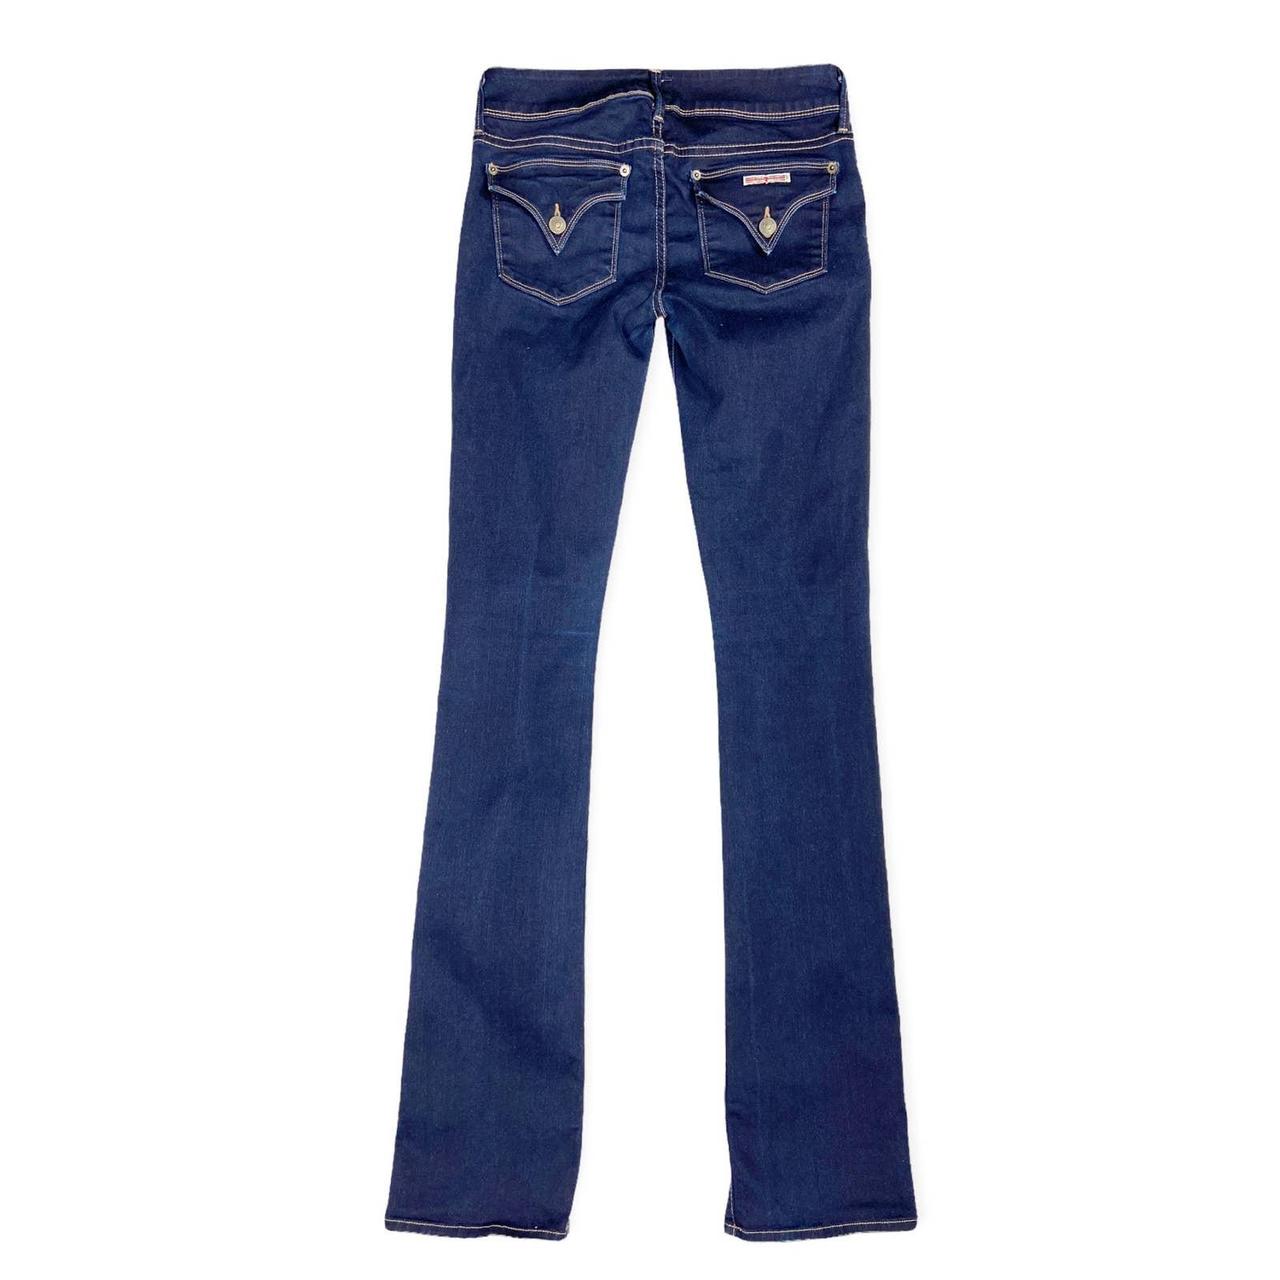 Product Image 1 - Y2K Low Rise Jeans 🍒

Y2K